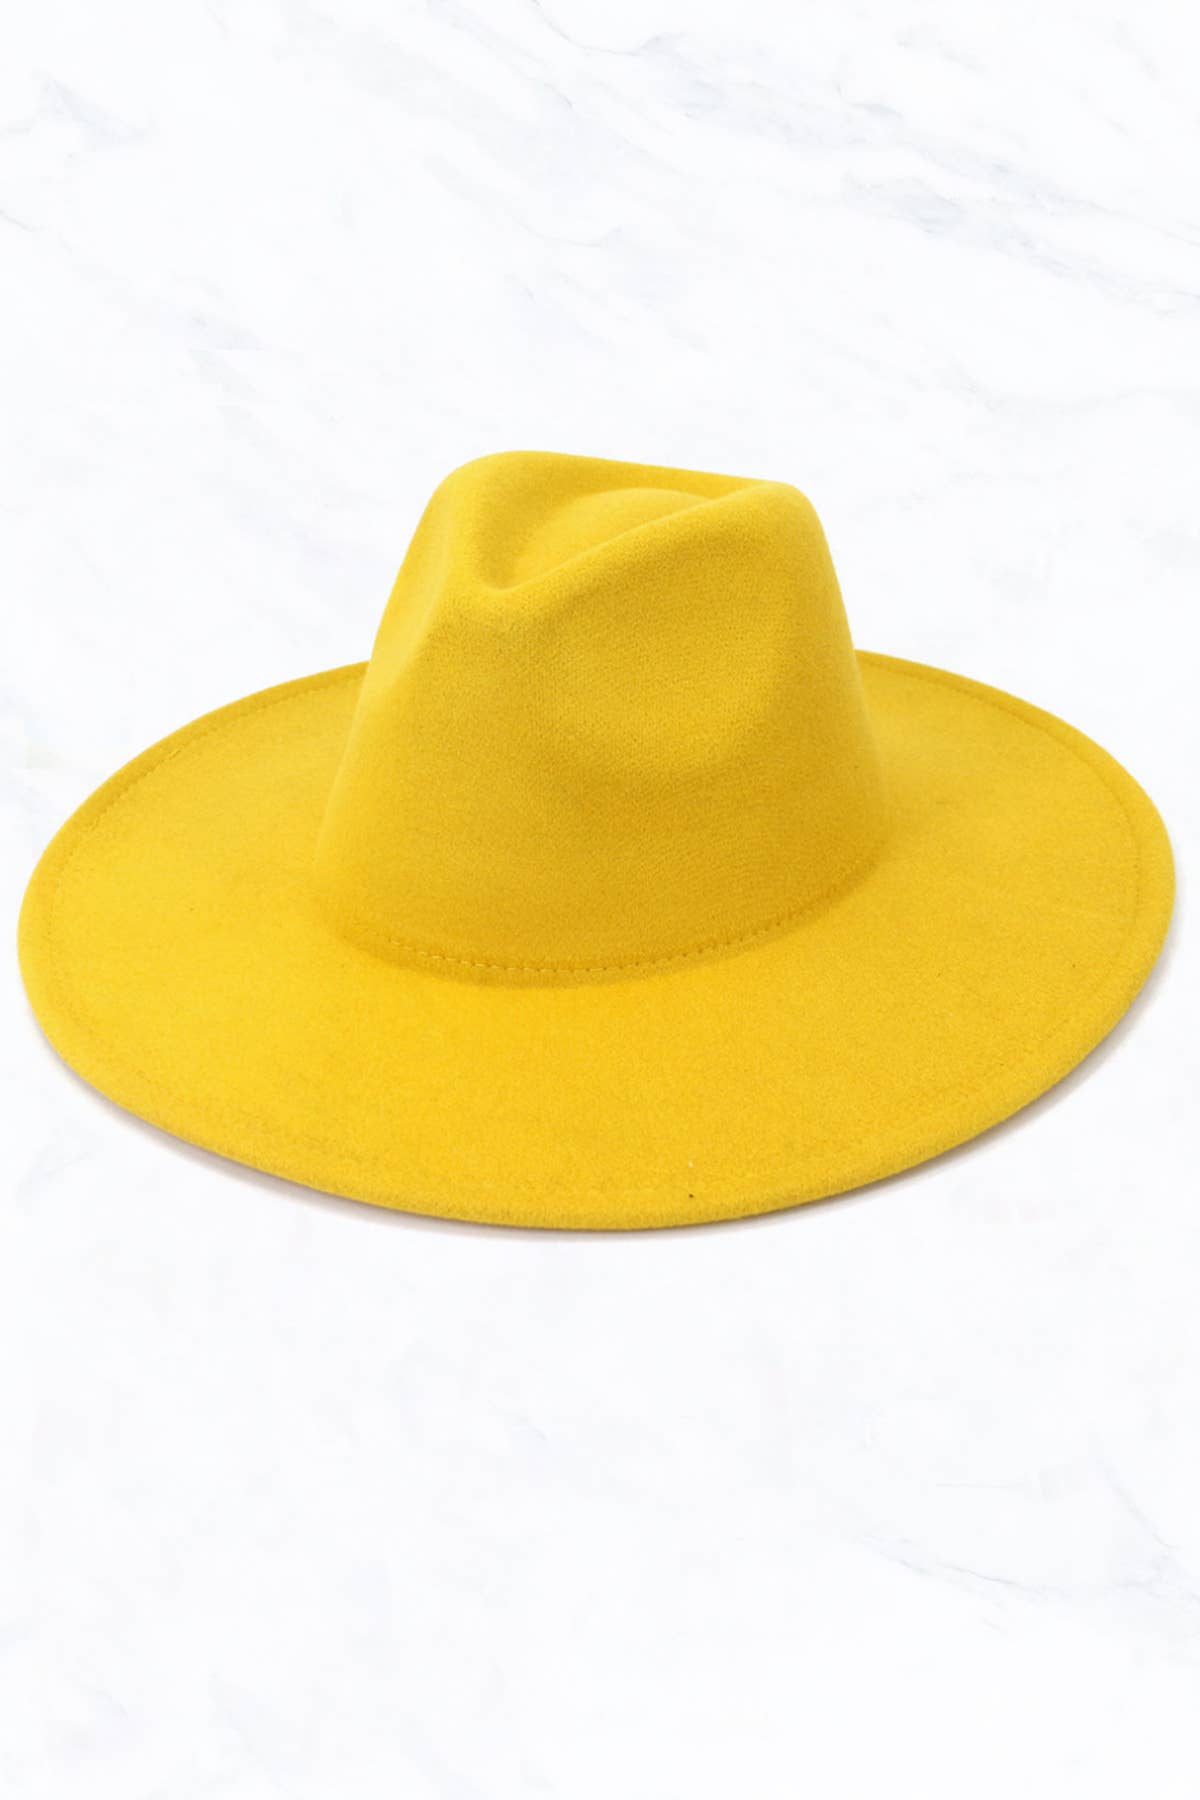 Suzie Q USA - Big Brim Peach Heart Top Jazz Hat: Yellow